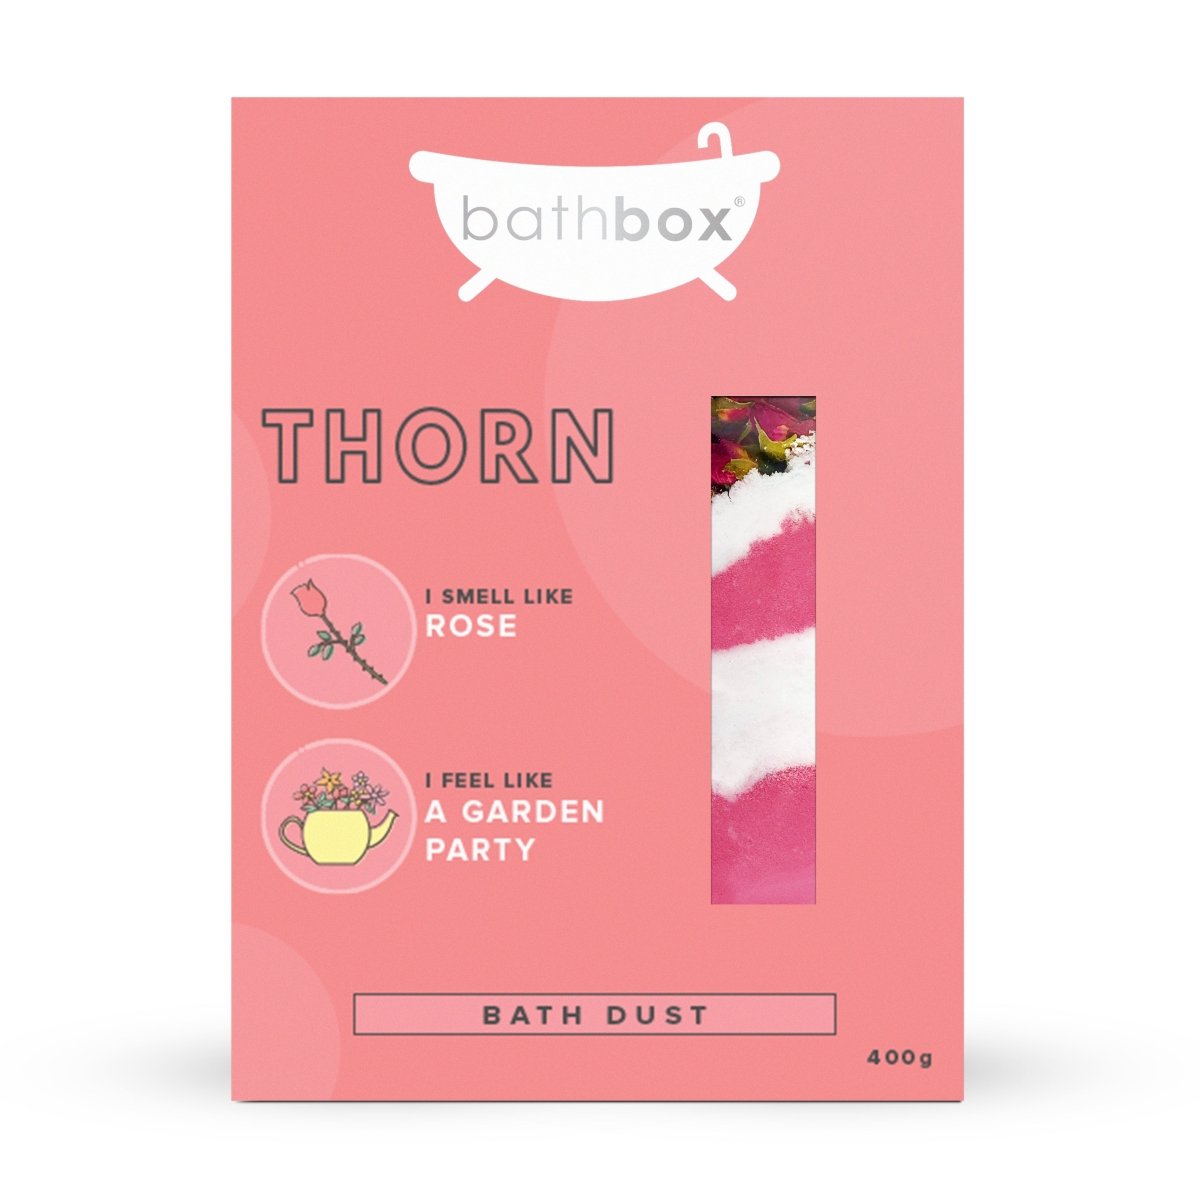 Thorn Bath Dust - Mother's Day - Bath Box Australia